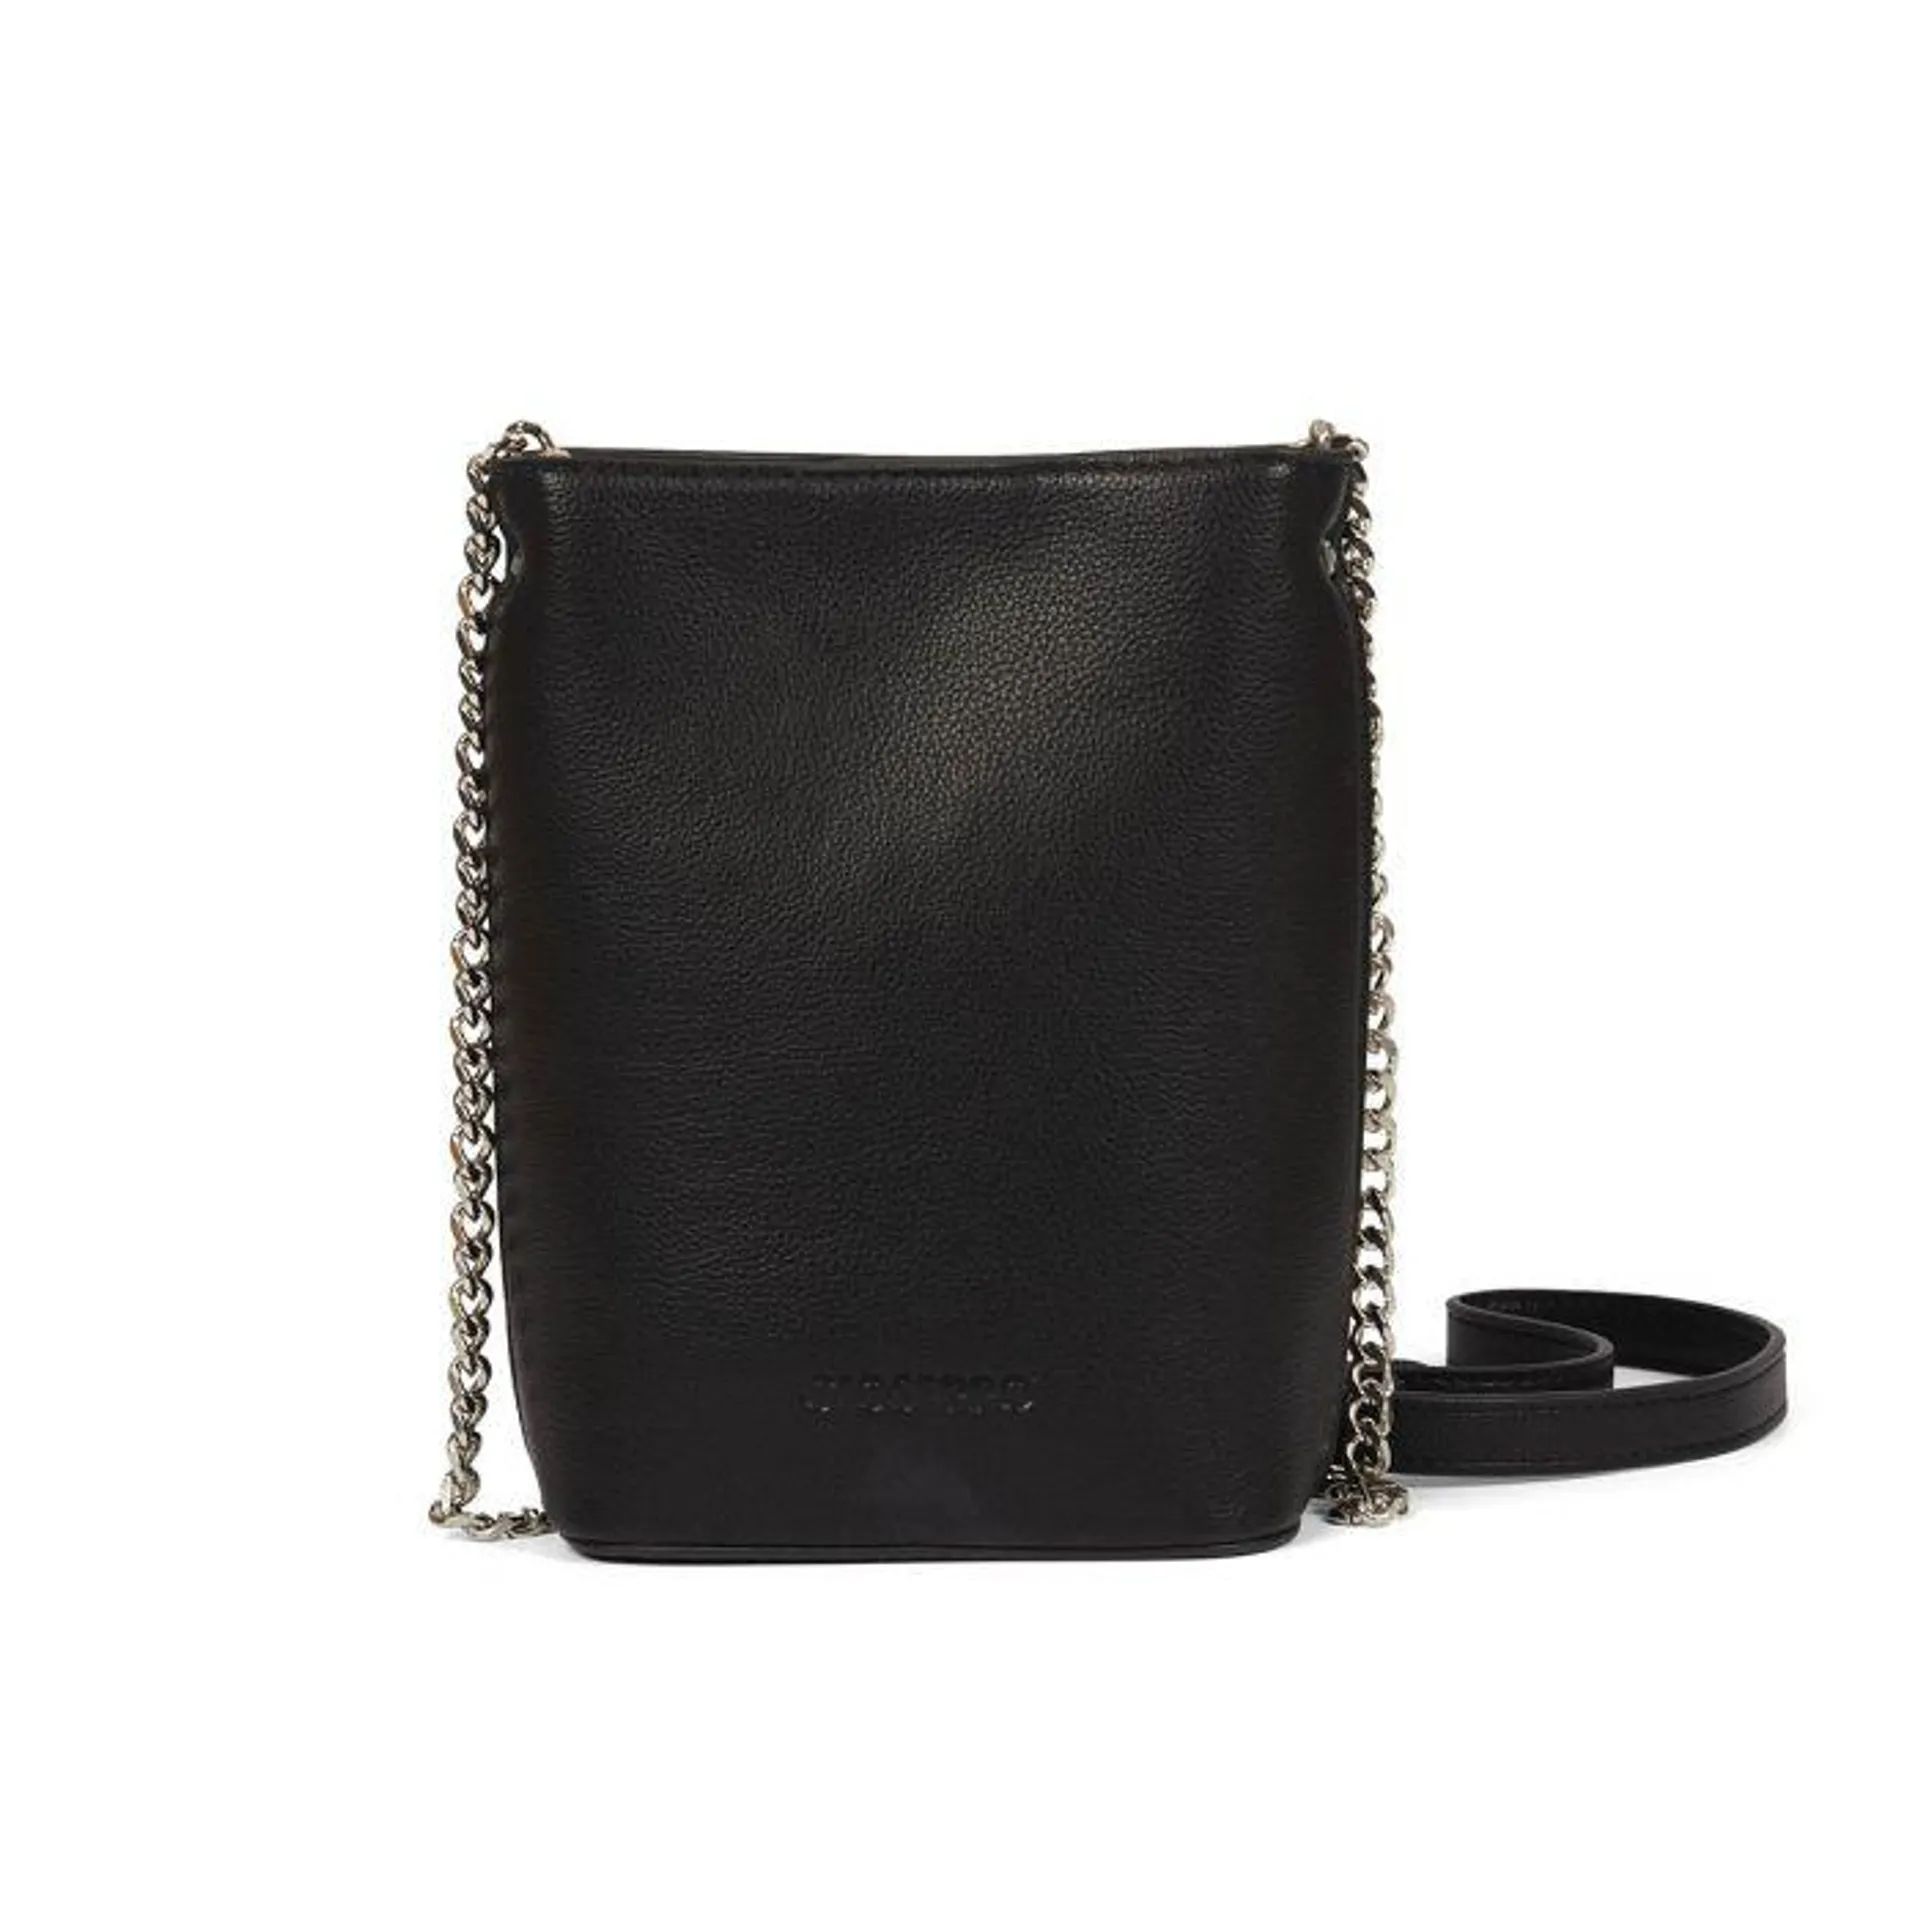 Talcy women's mini black crossbody bag with a decorative chain